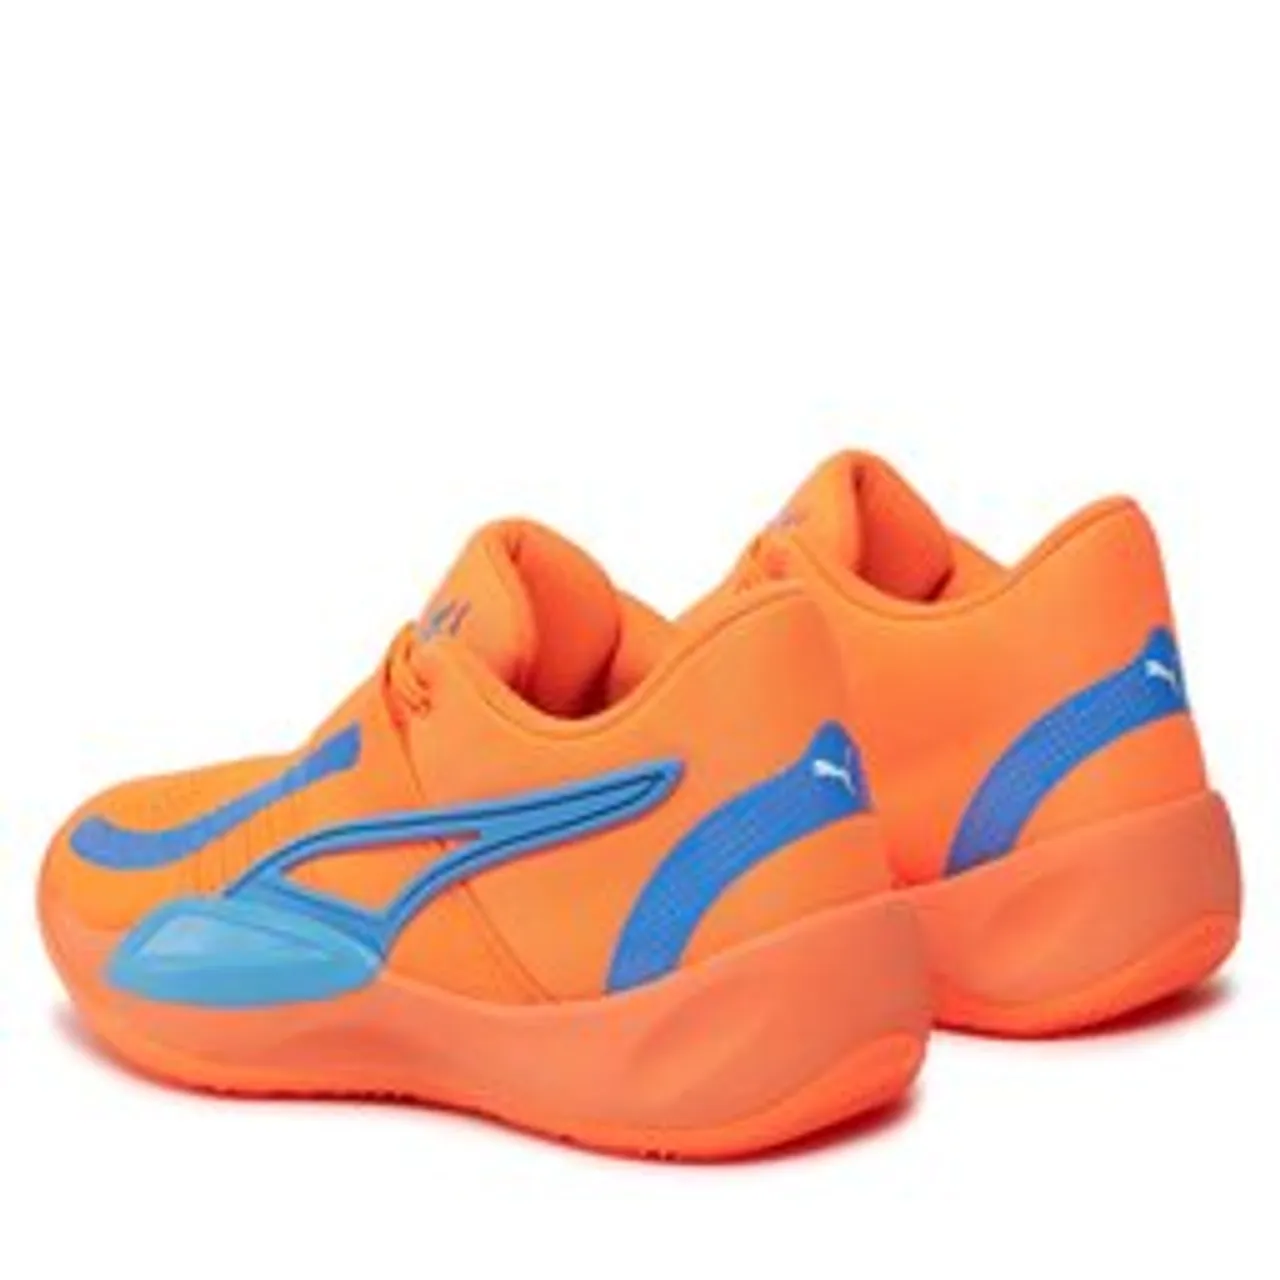 Sneakers Puma Rise Nitro Njr 378947 01 Orange